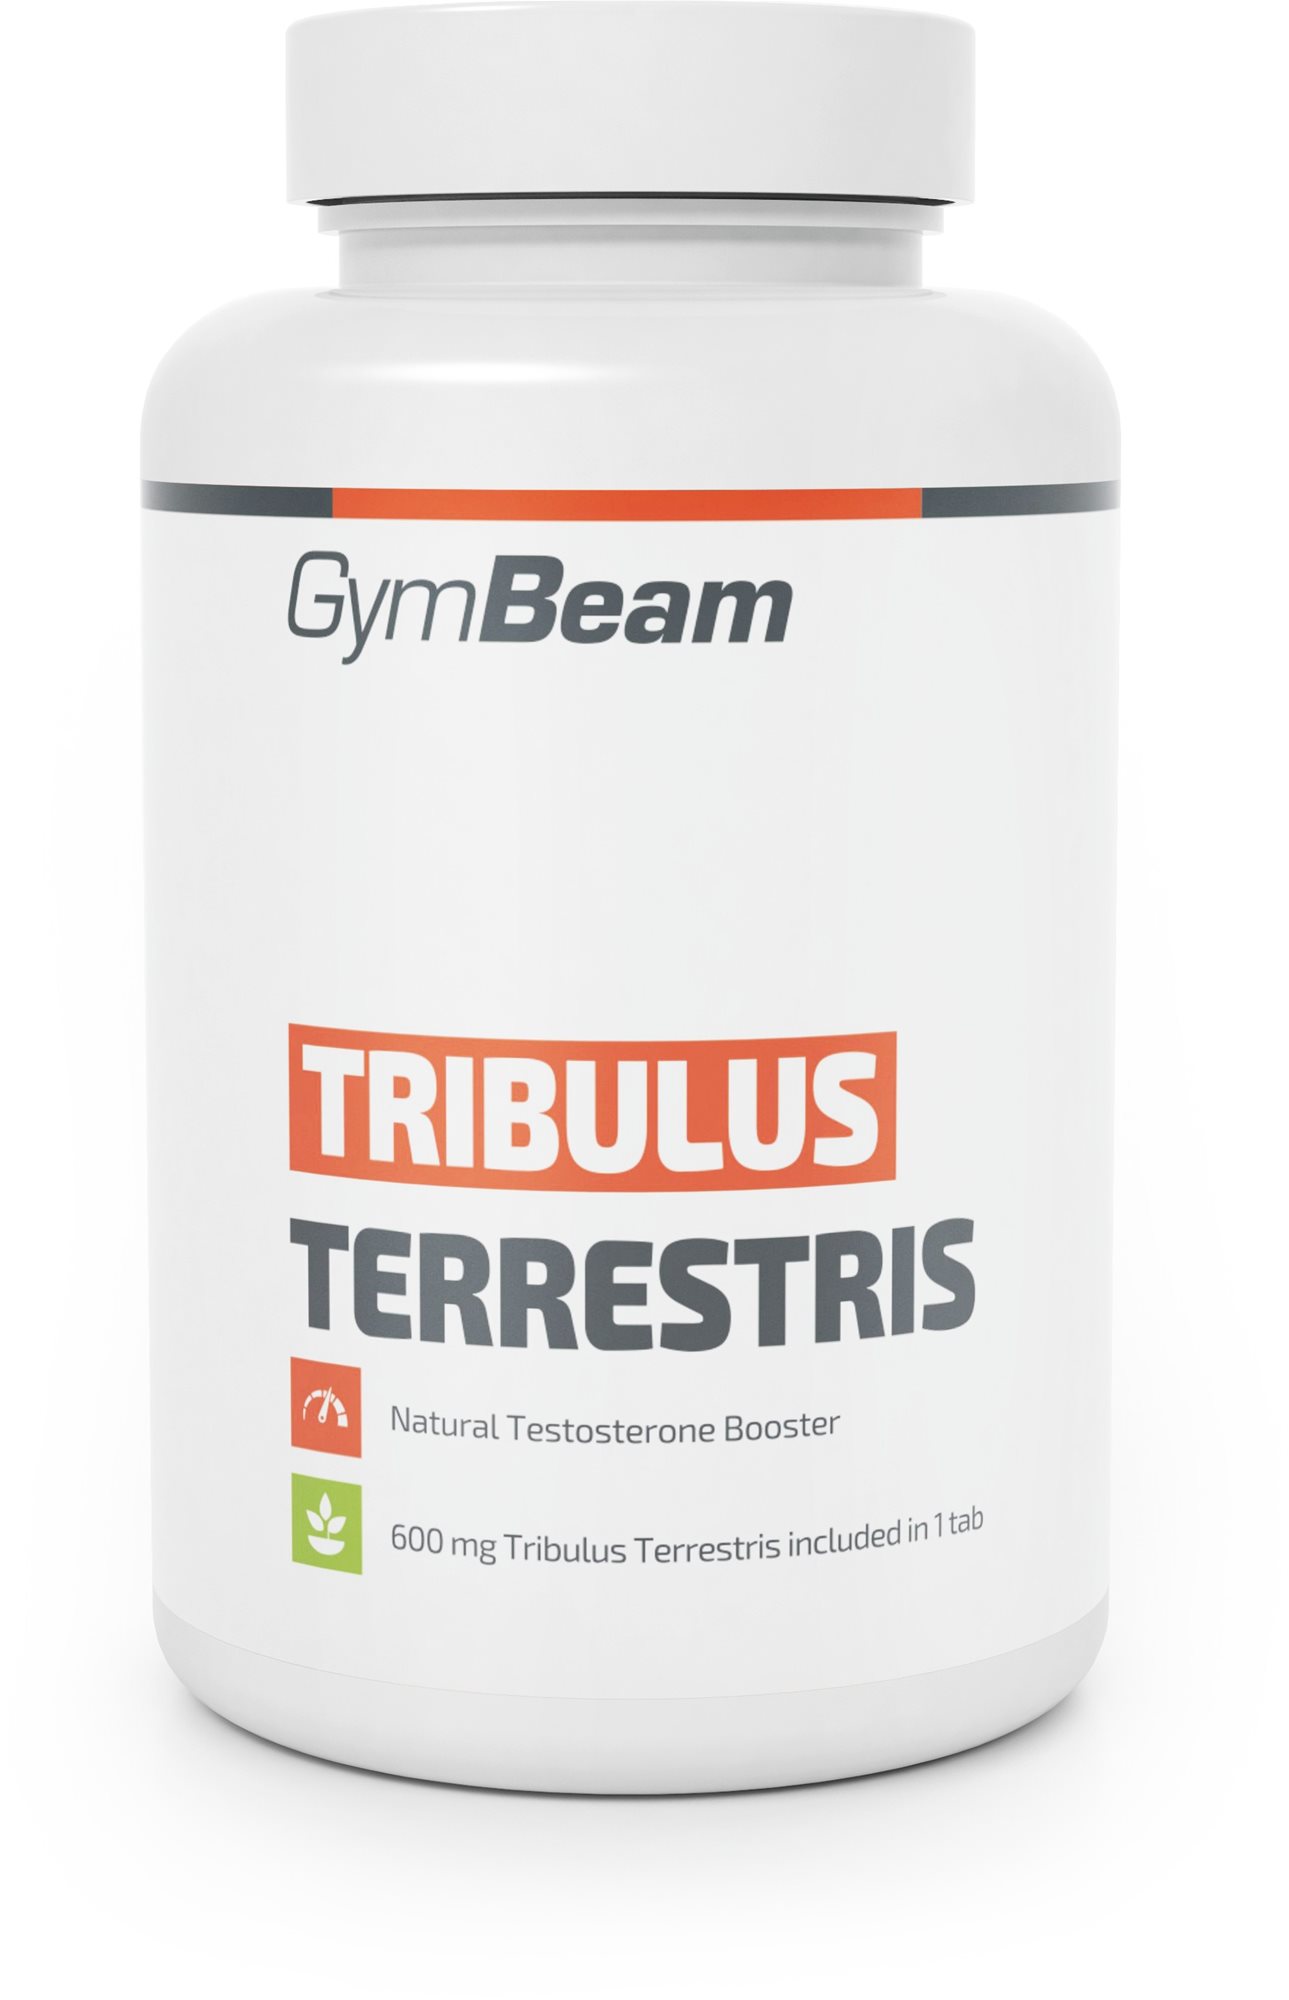 GymBeam Tribulus Terrestris 120 tbl